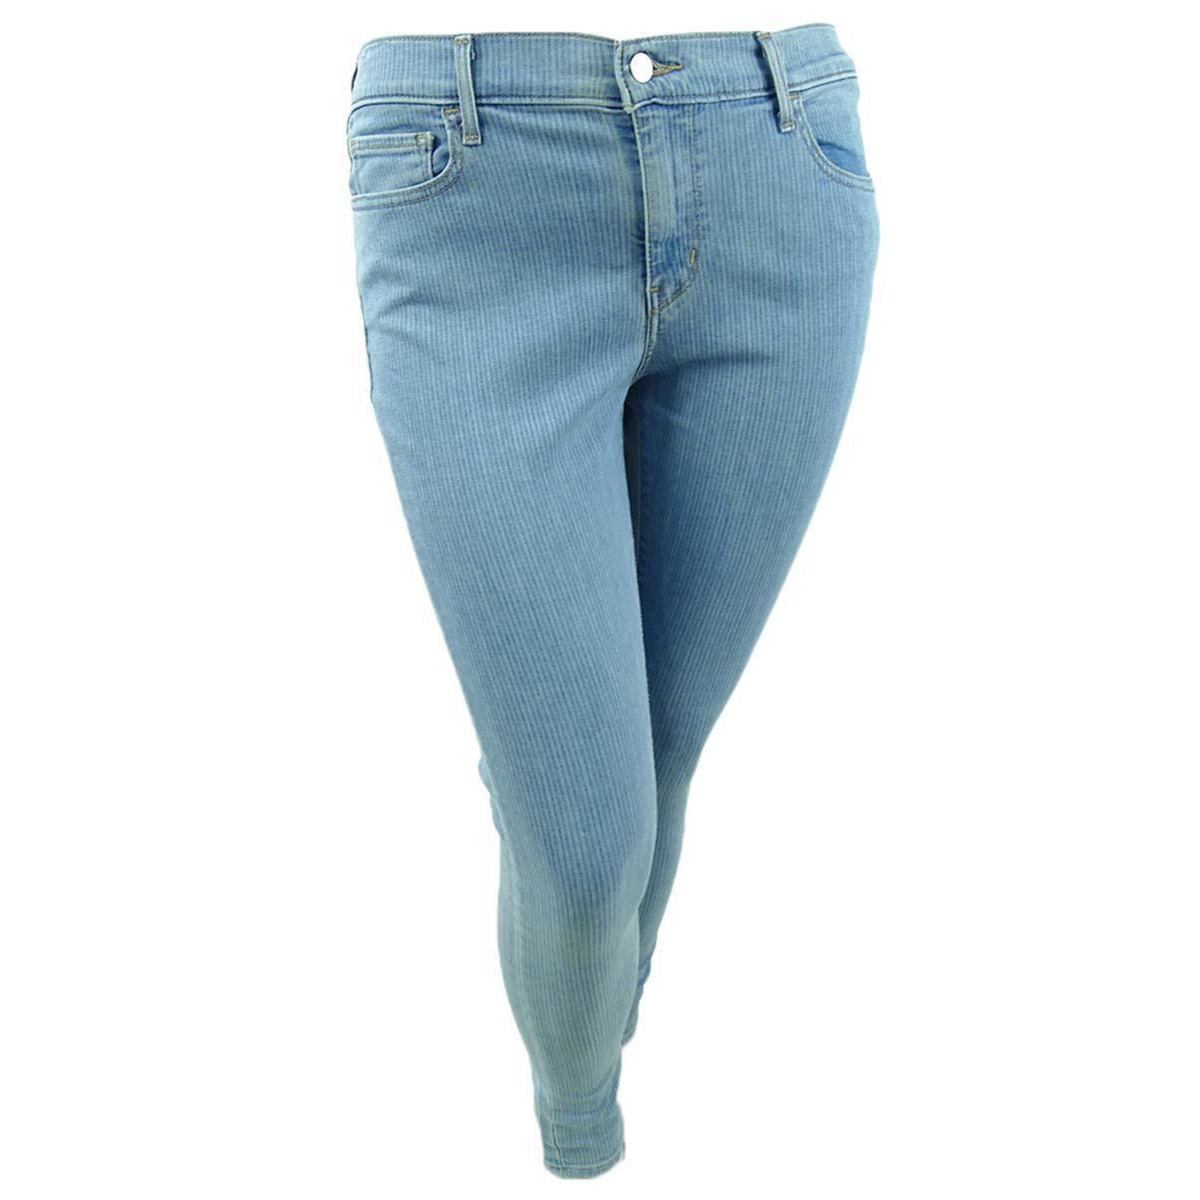 Levi's Women's 710 Striped Super Skinny Jeans